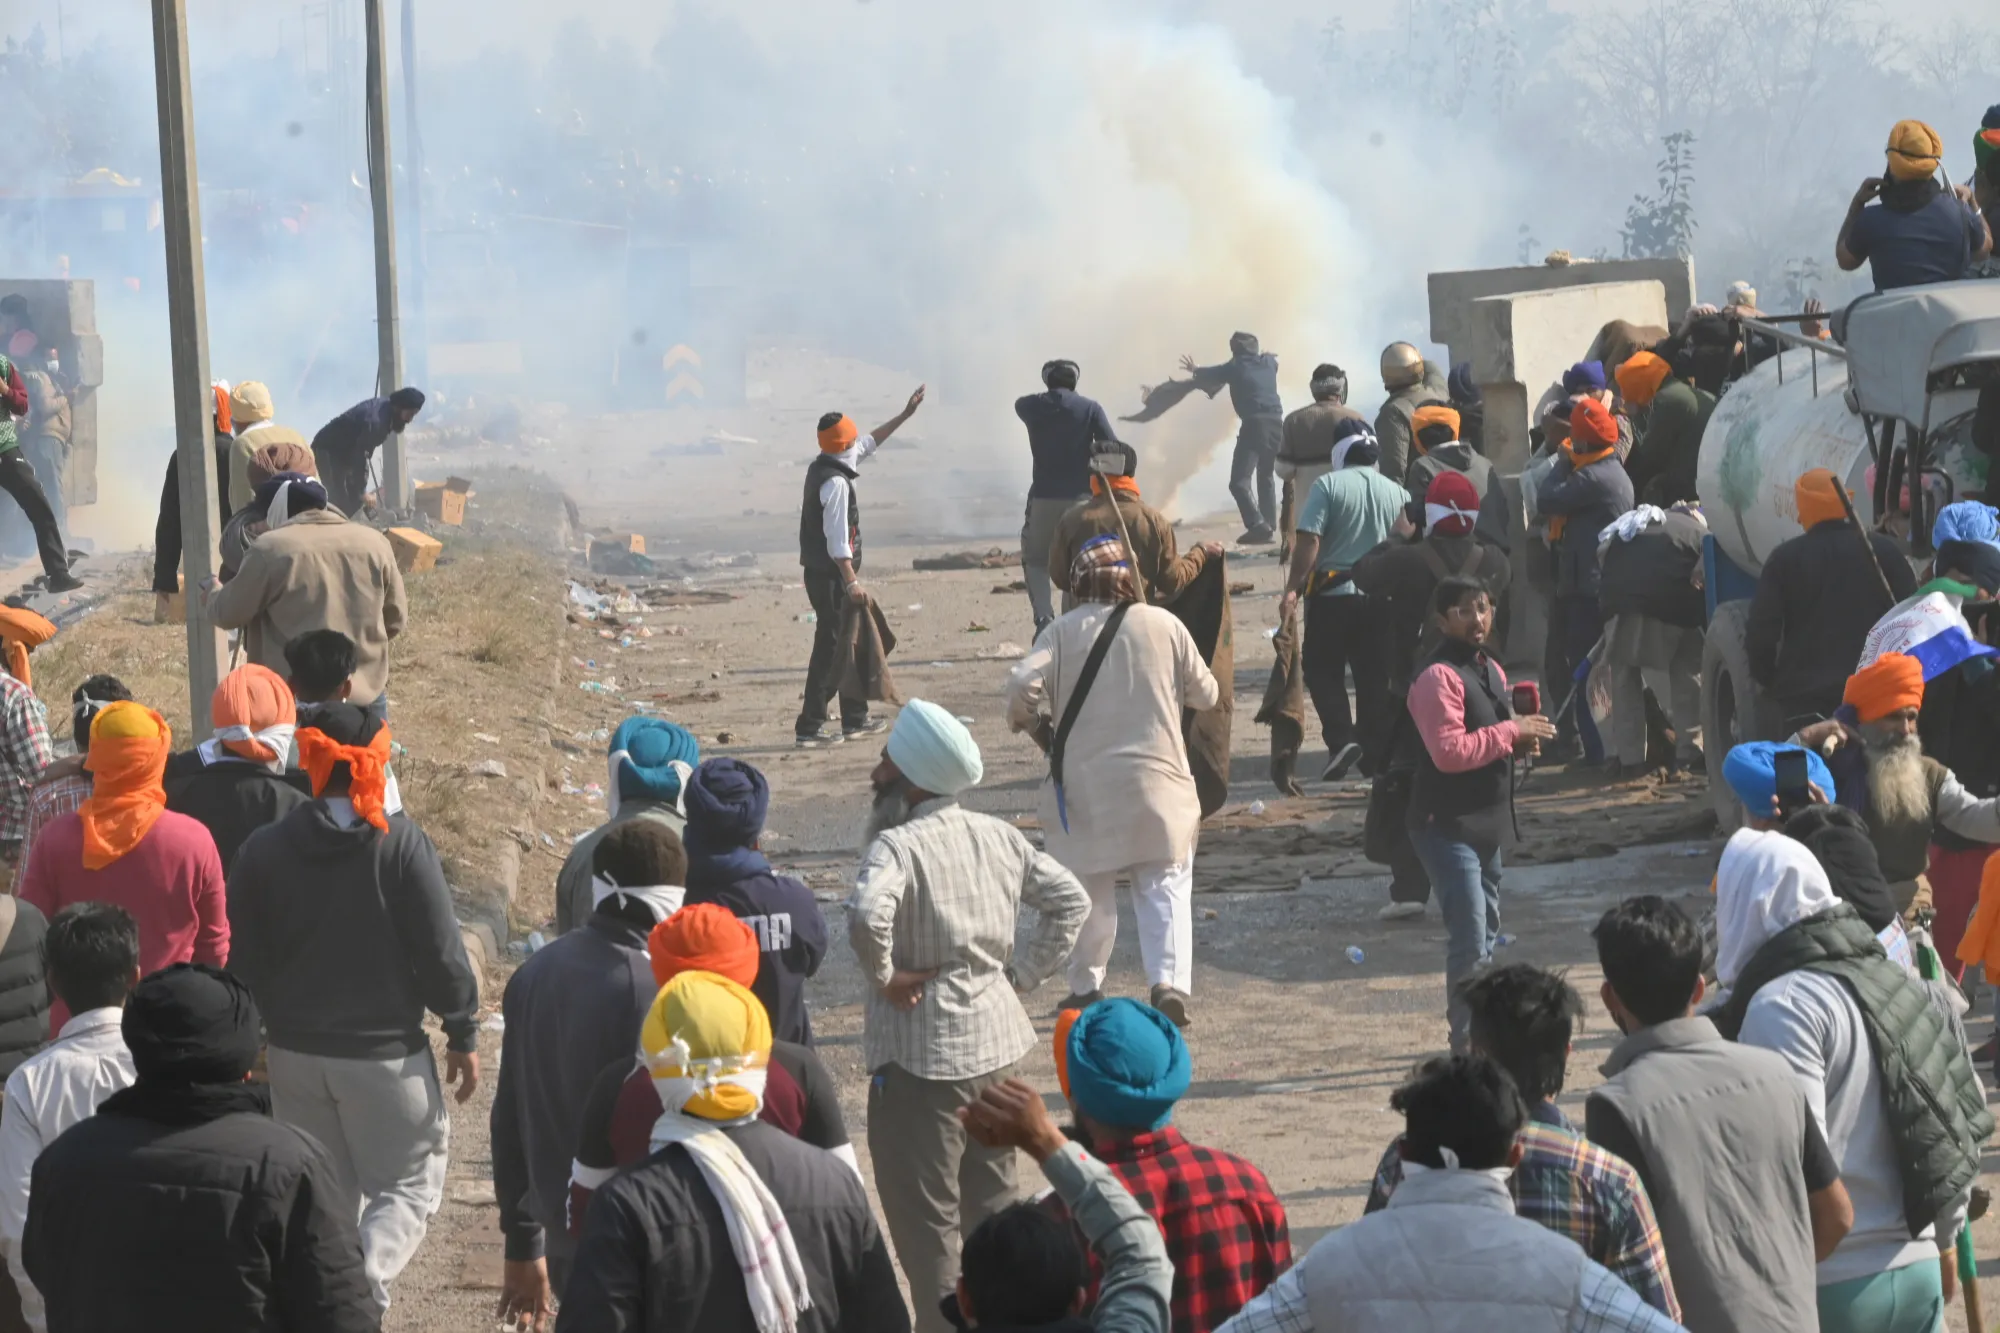 fermeret indiane perleshen me policine ndersa protestat pershkallezohen